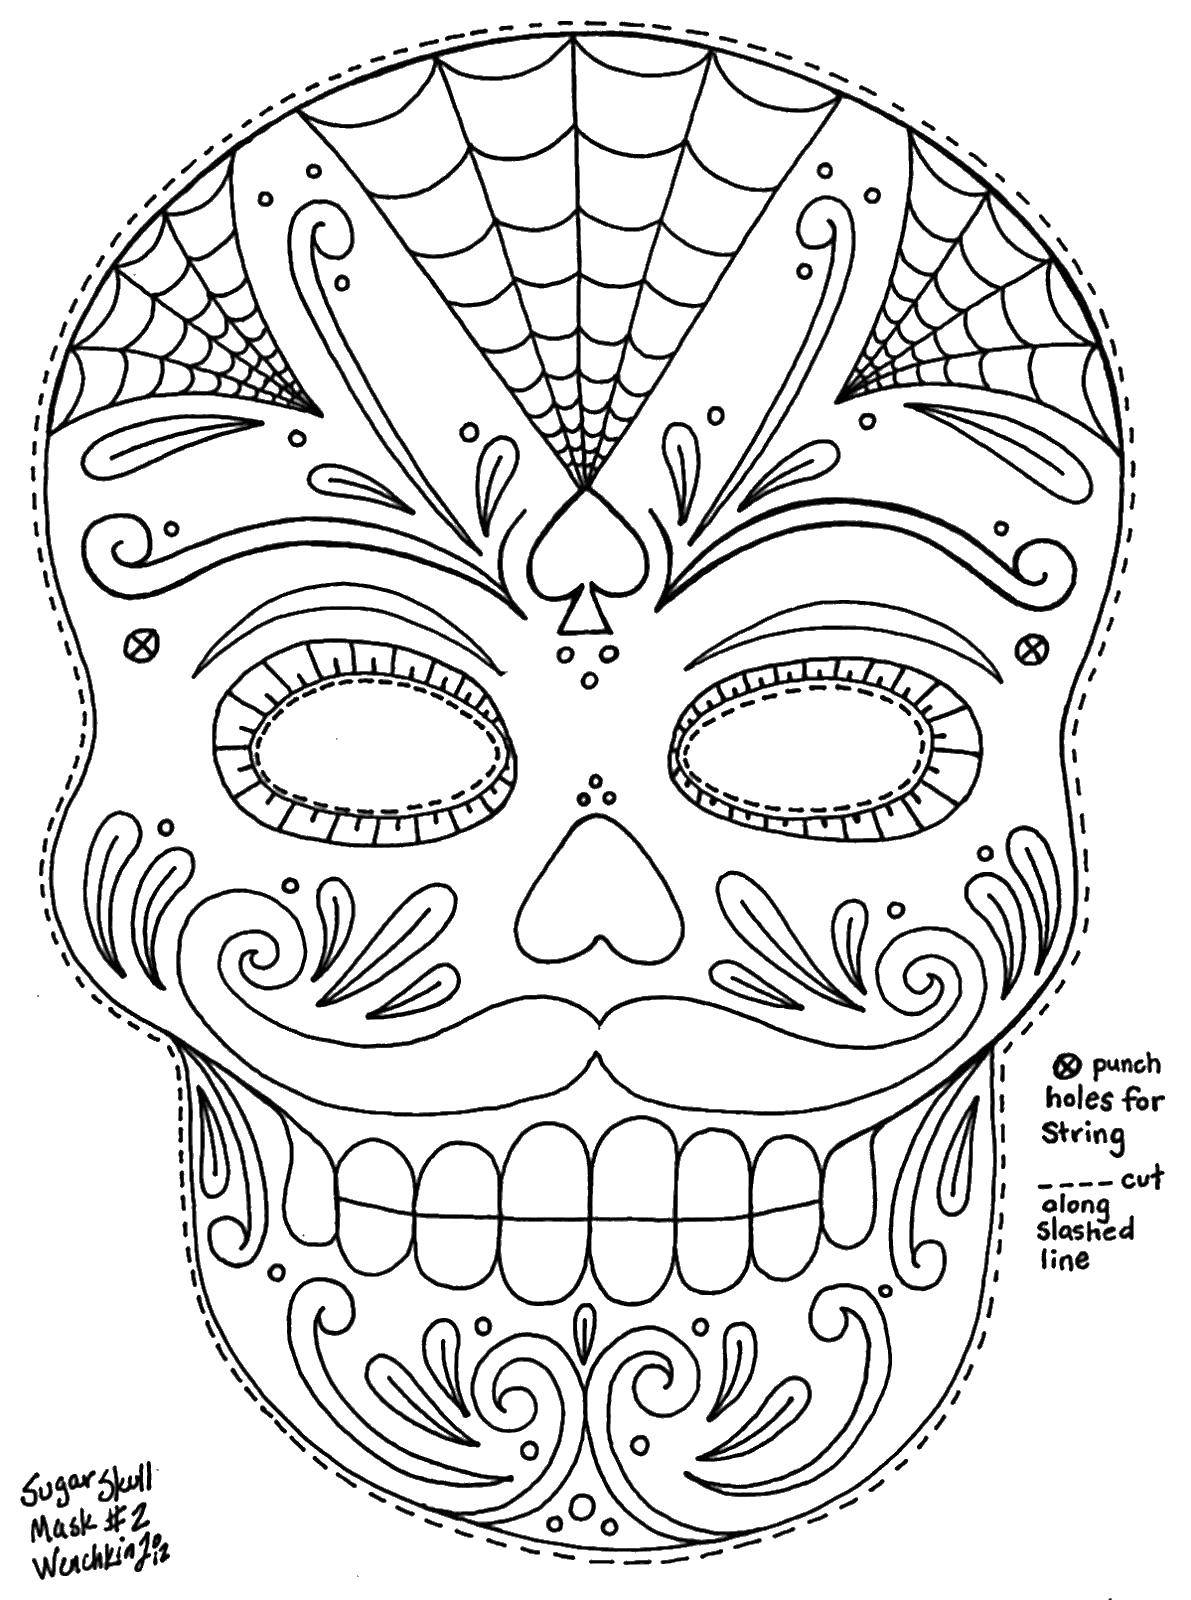 Coloring Skull and web. Category Skull. Tags:  skull, spider webs, hearts.